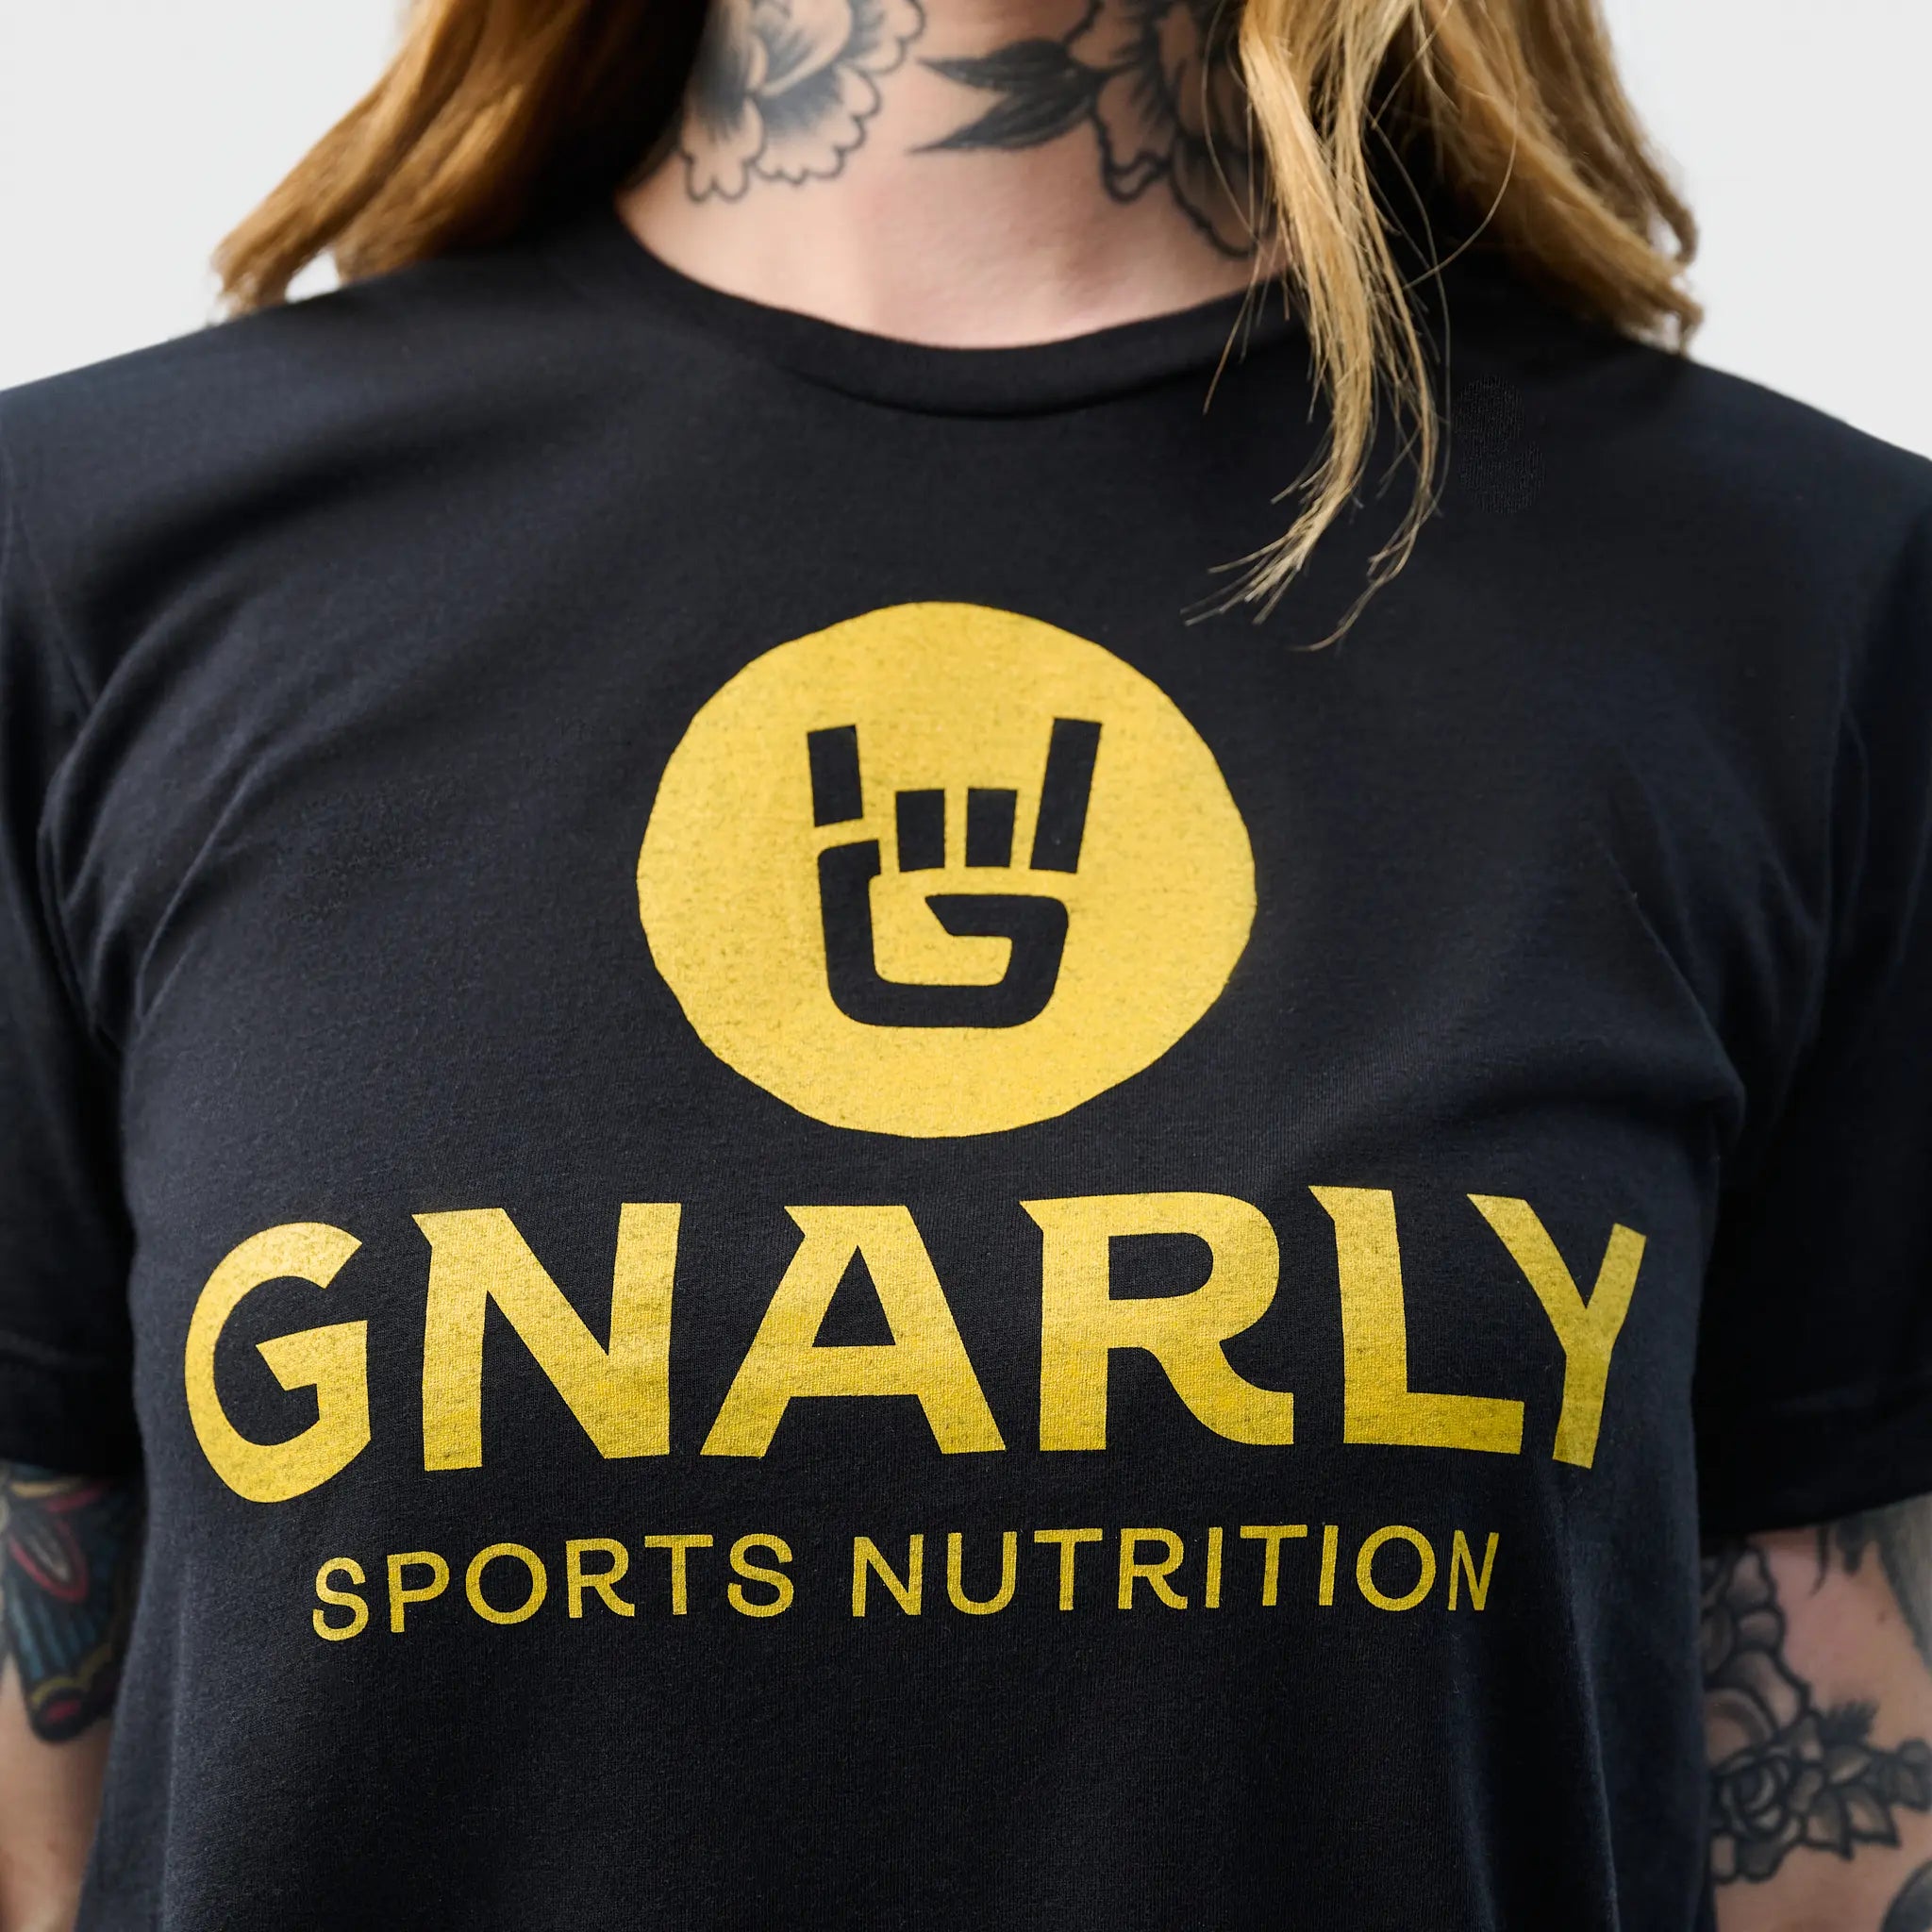 Black & Yellow T-Shirt - Gnarly Nutrition